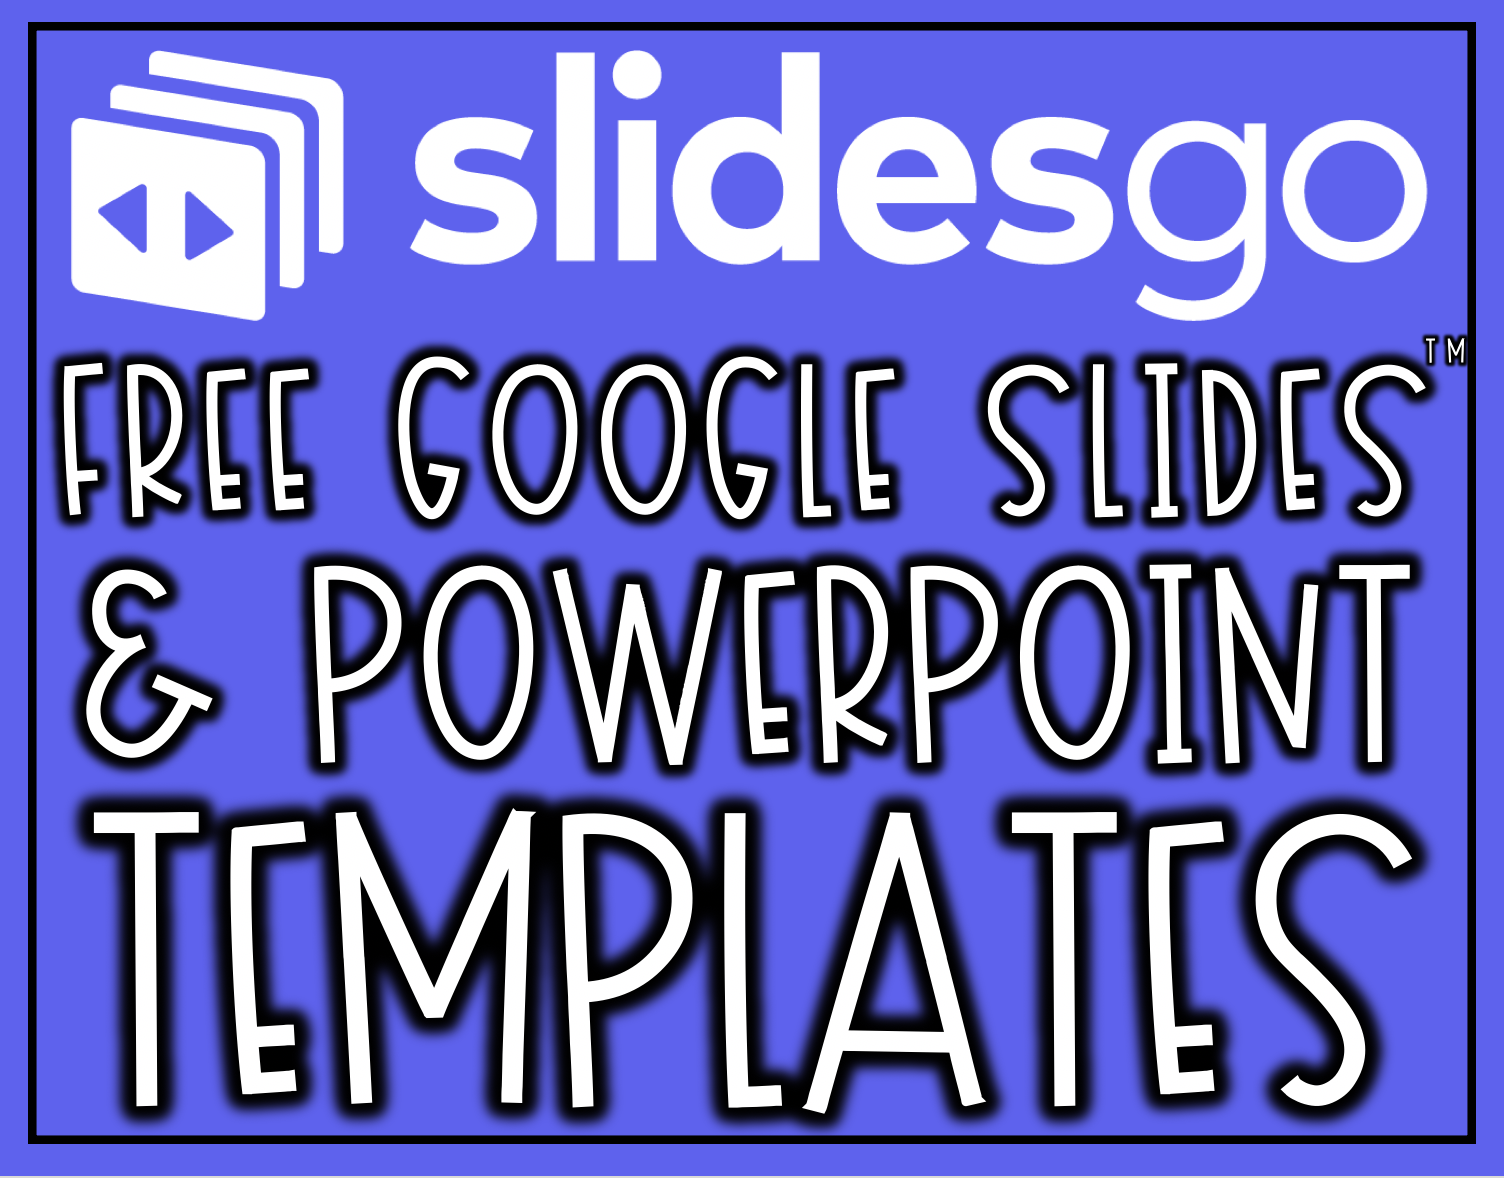 Slidesgo Free Google Slides And Powerpoint Templates The Techie Teacher